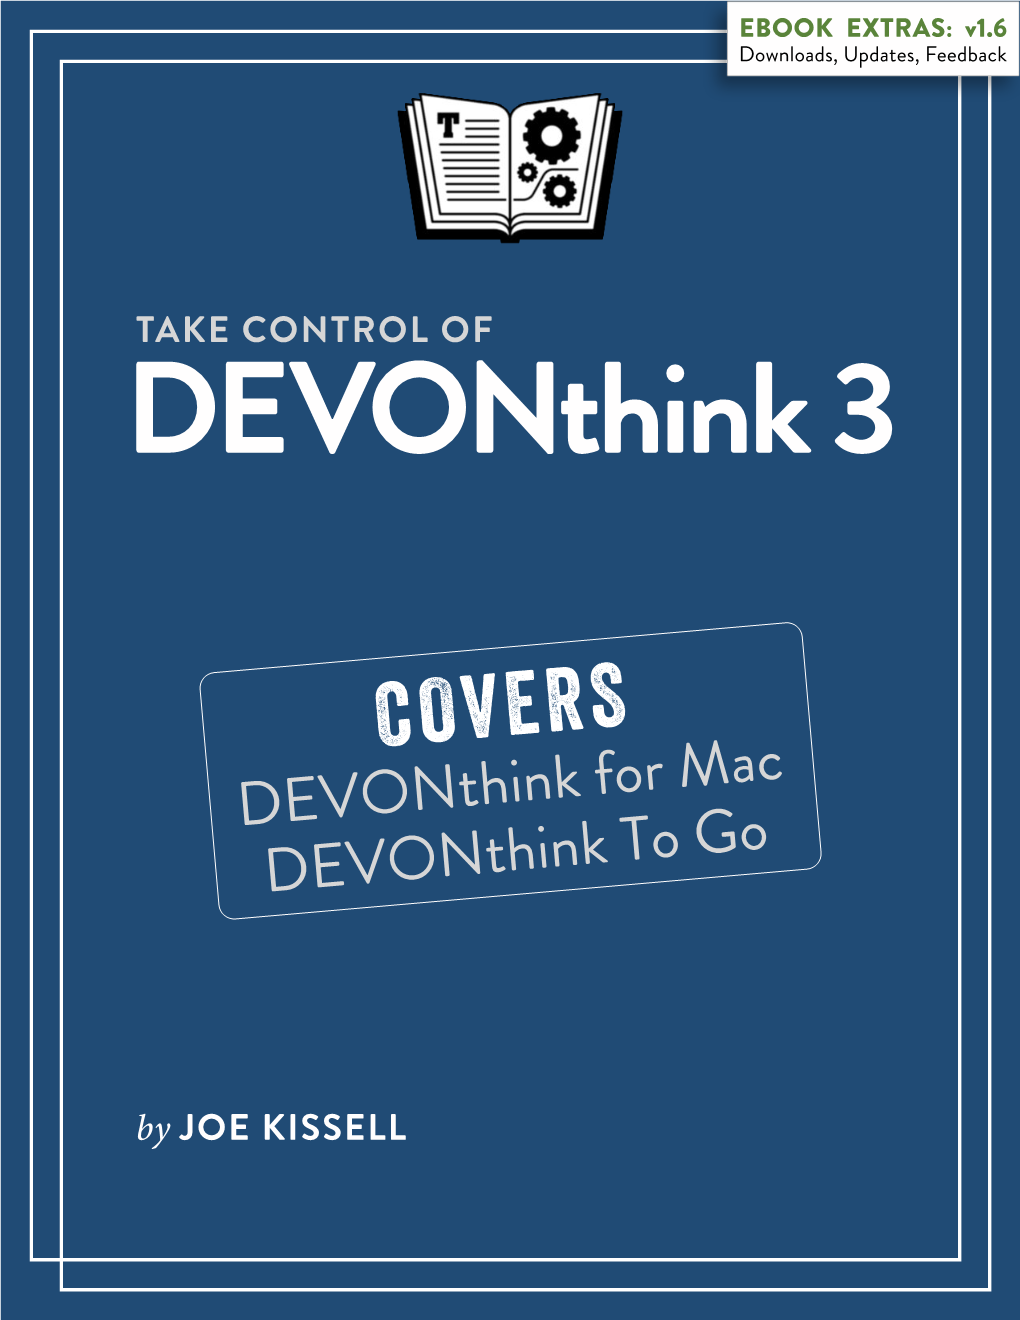 Take Control of Devonthink 3 (1.6)